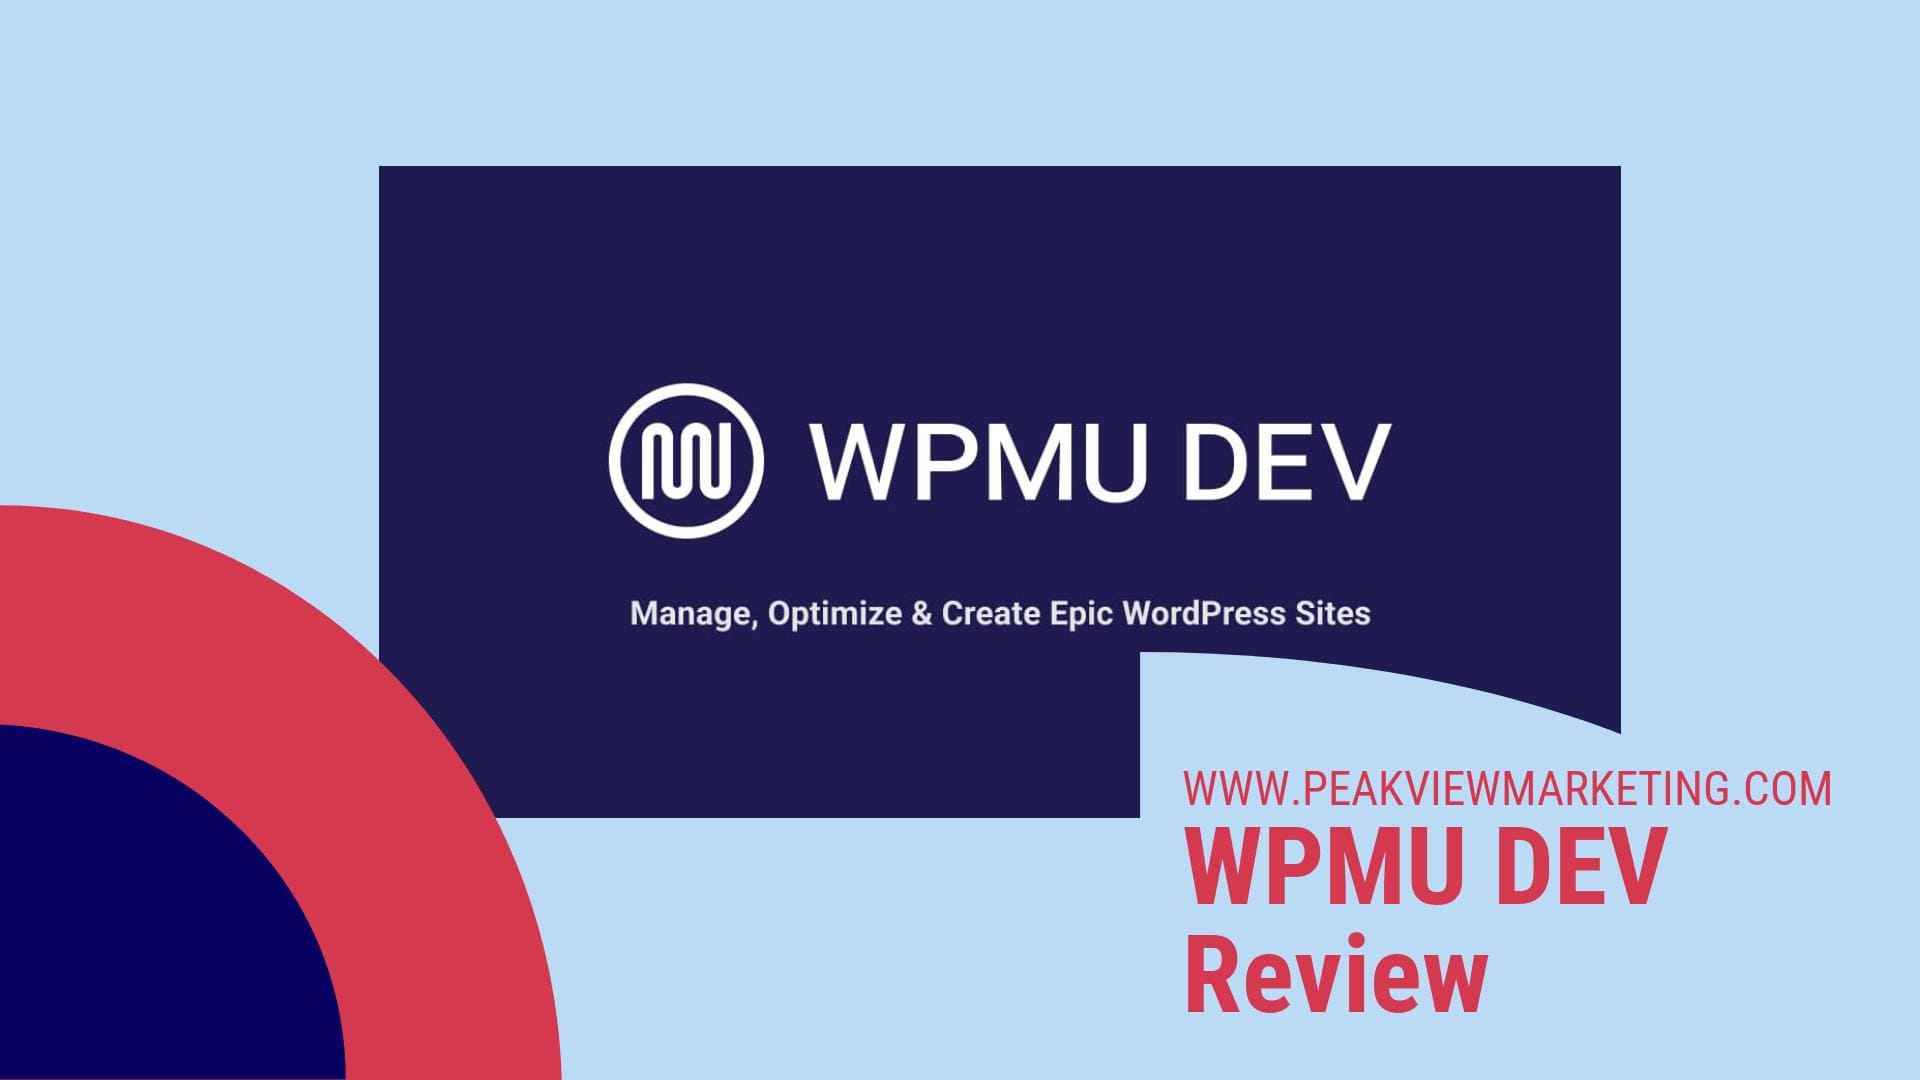 WPMU DEV Review Image